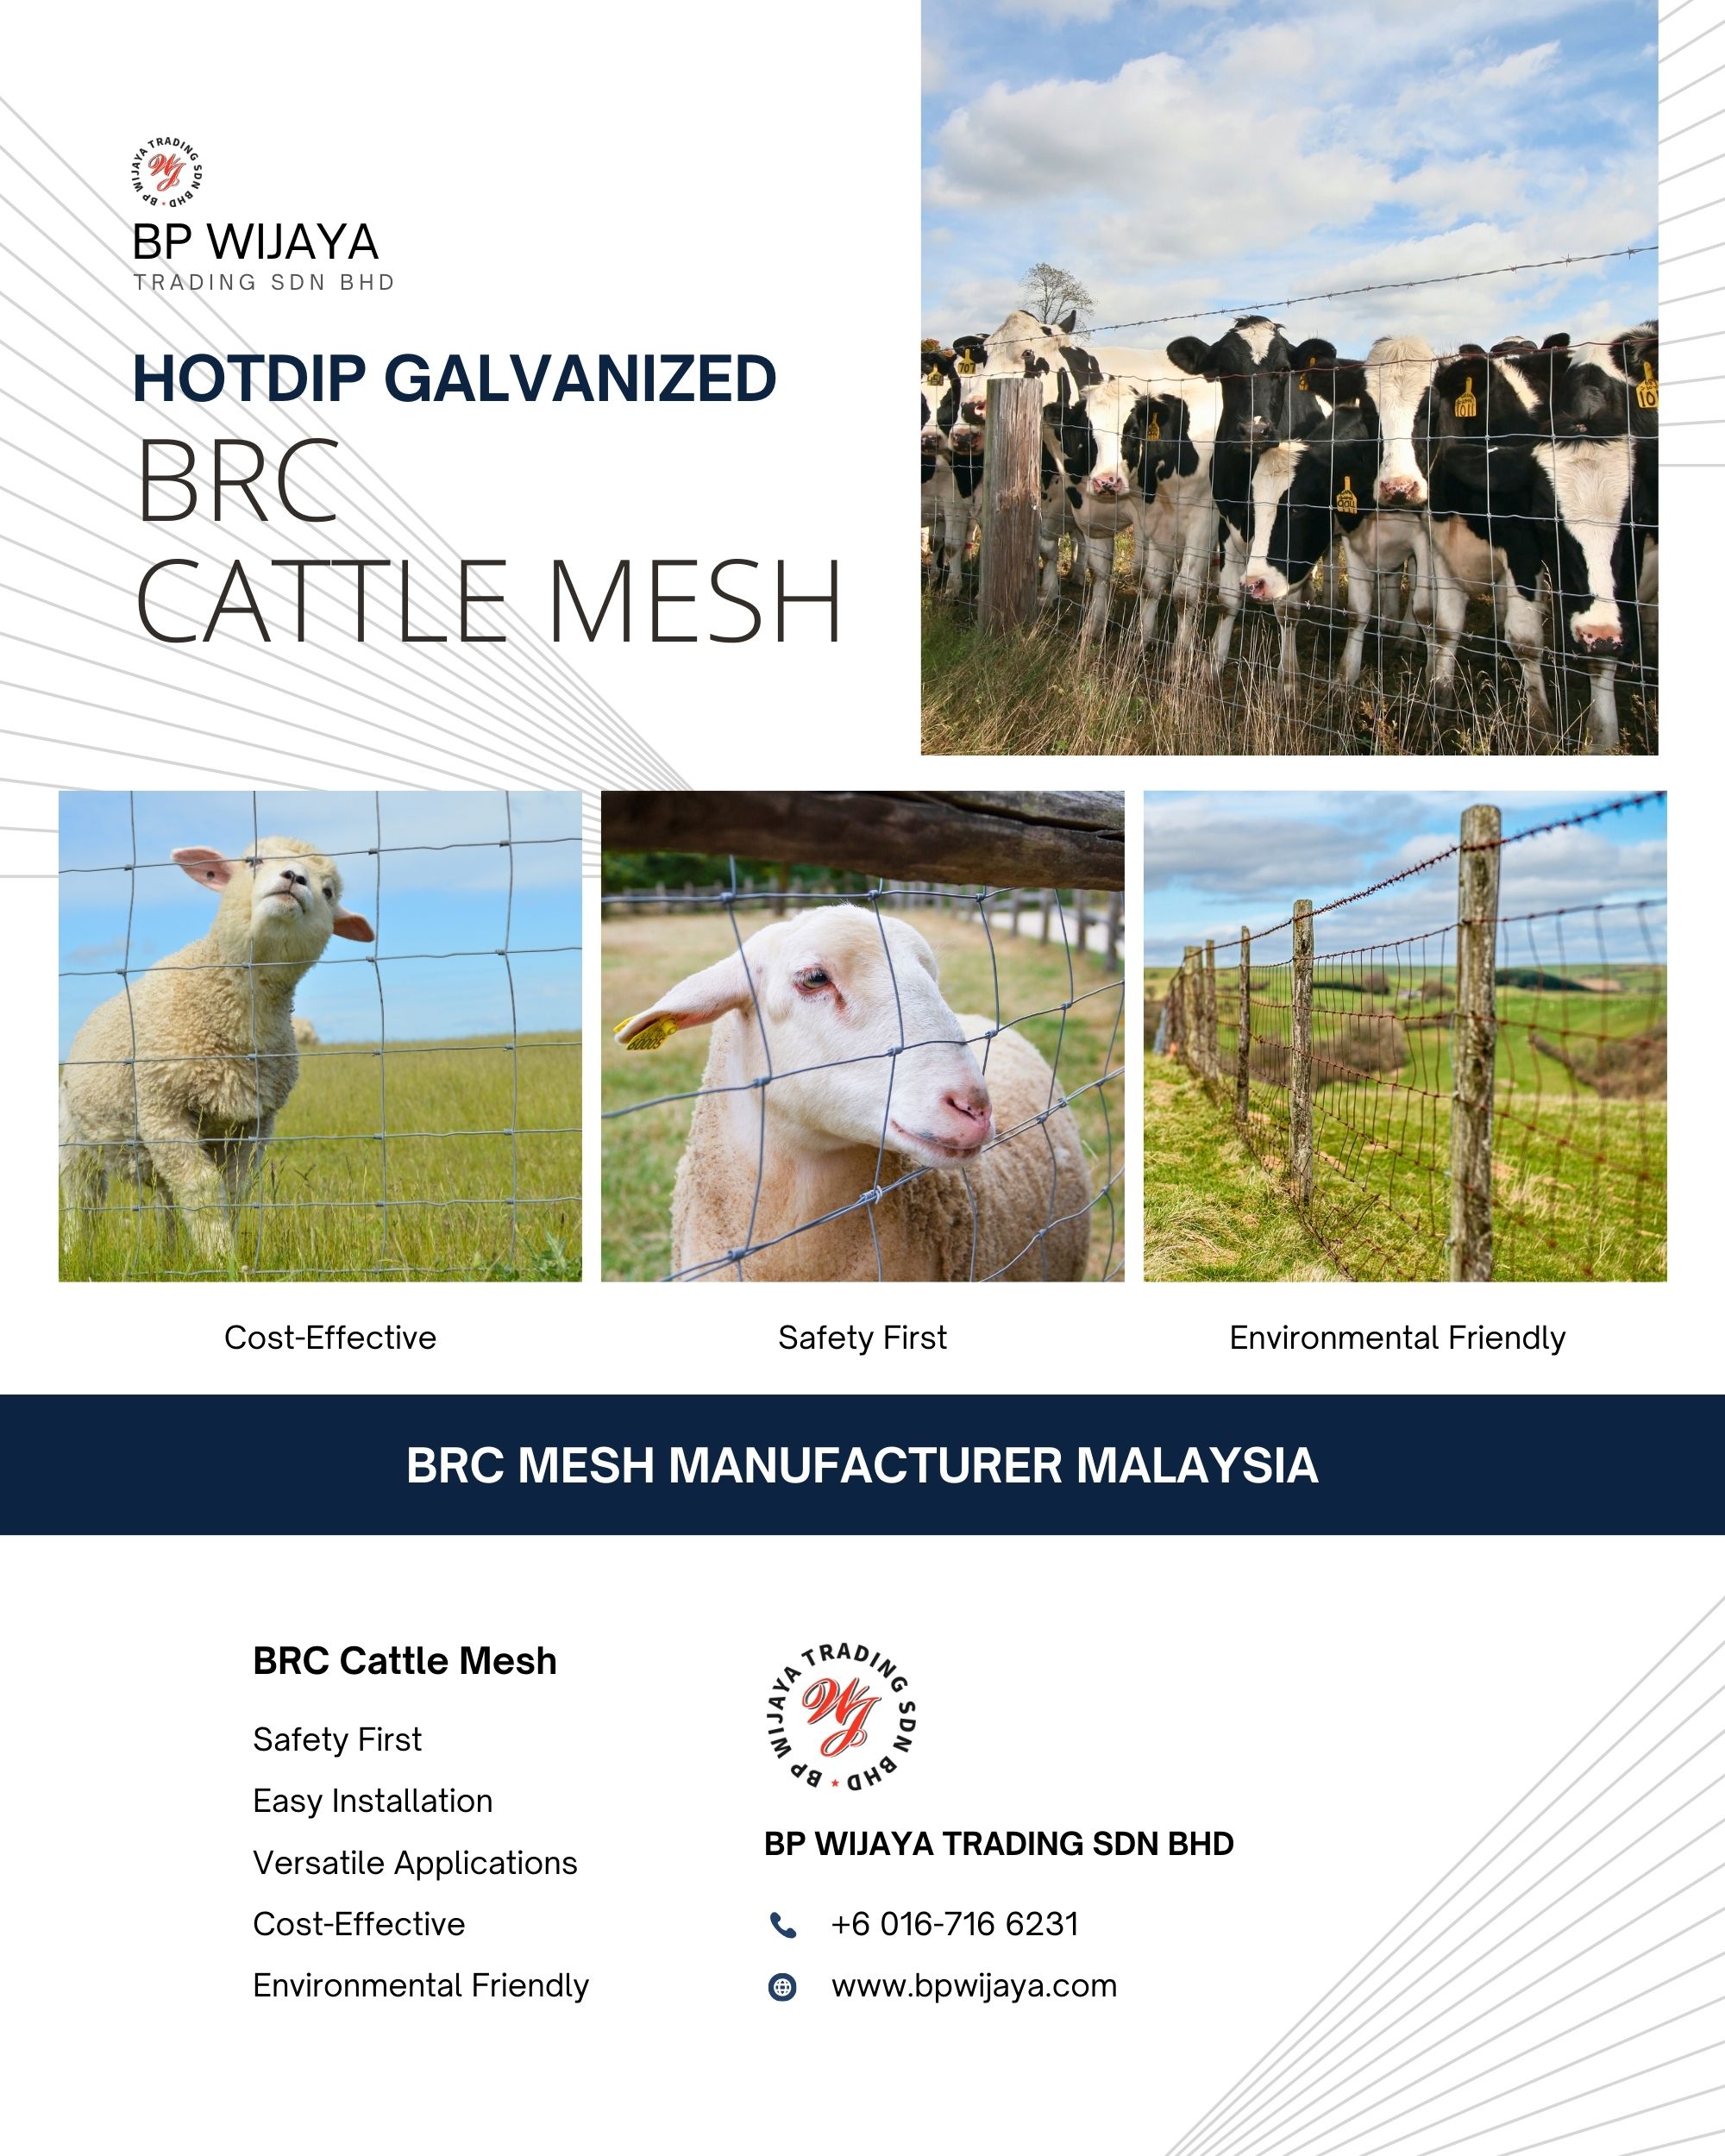 Hotdip Galvanized BRC Cattle Mesh Malaysia - BP Wijaya Trading Sdn Bhd Wire Mesh Manufacturer Malaysia